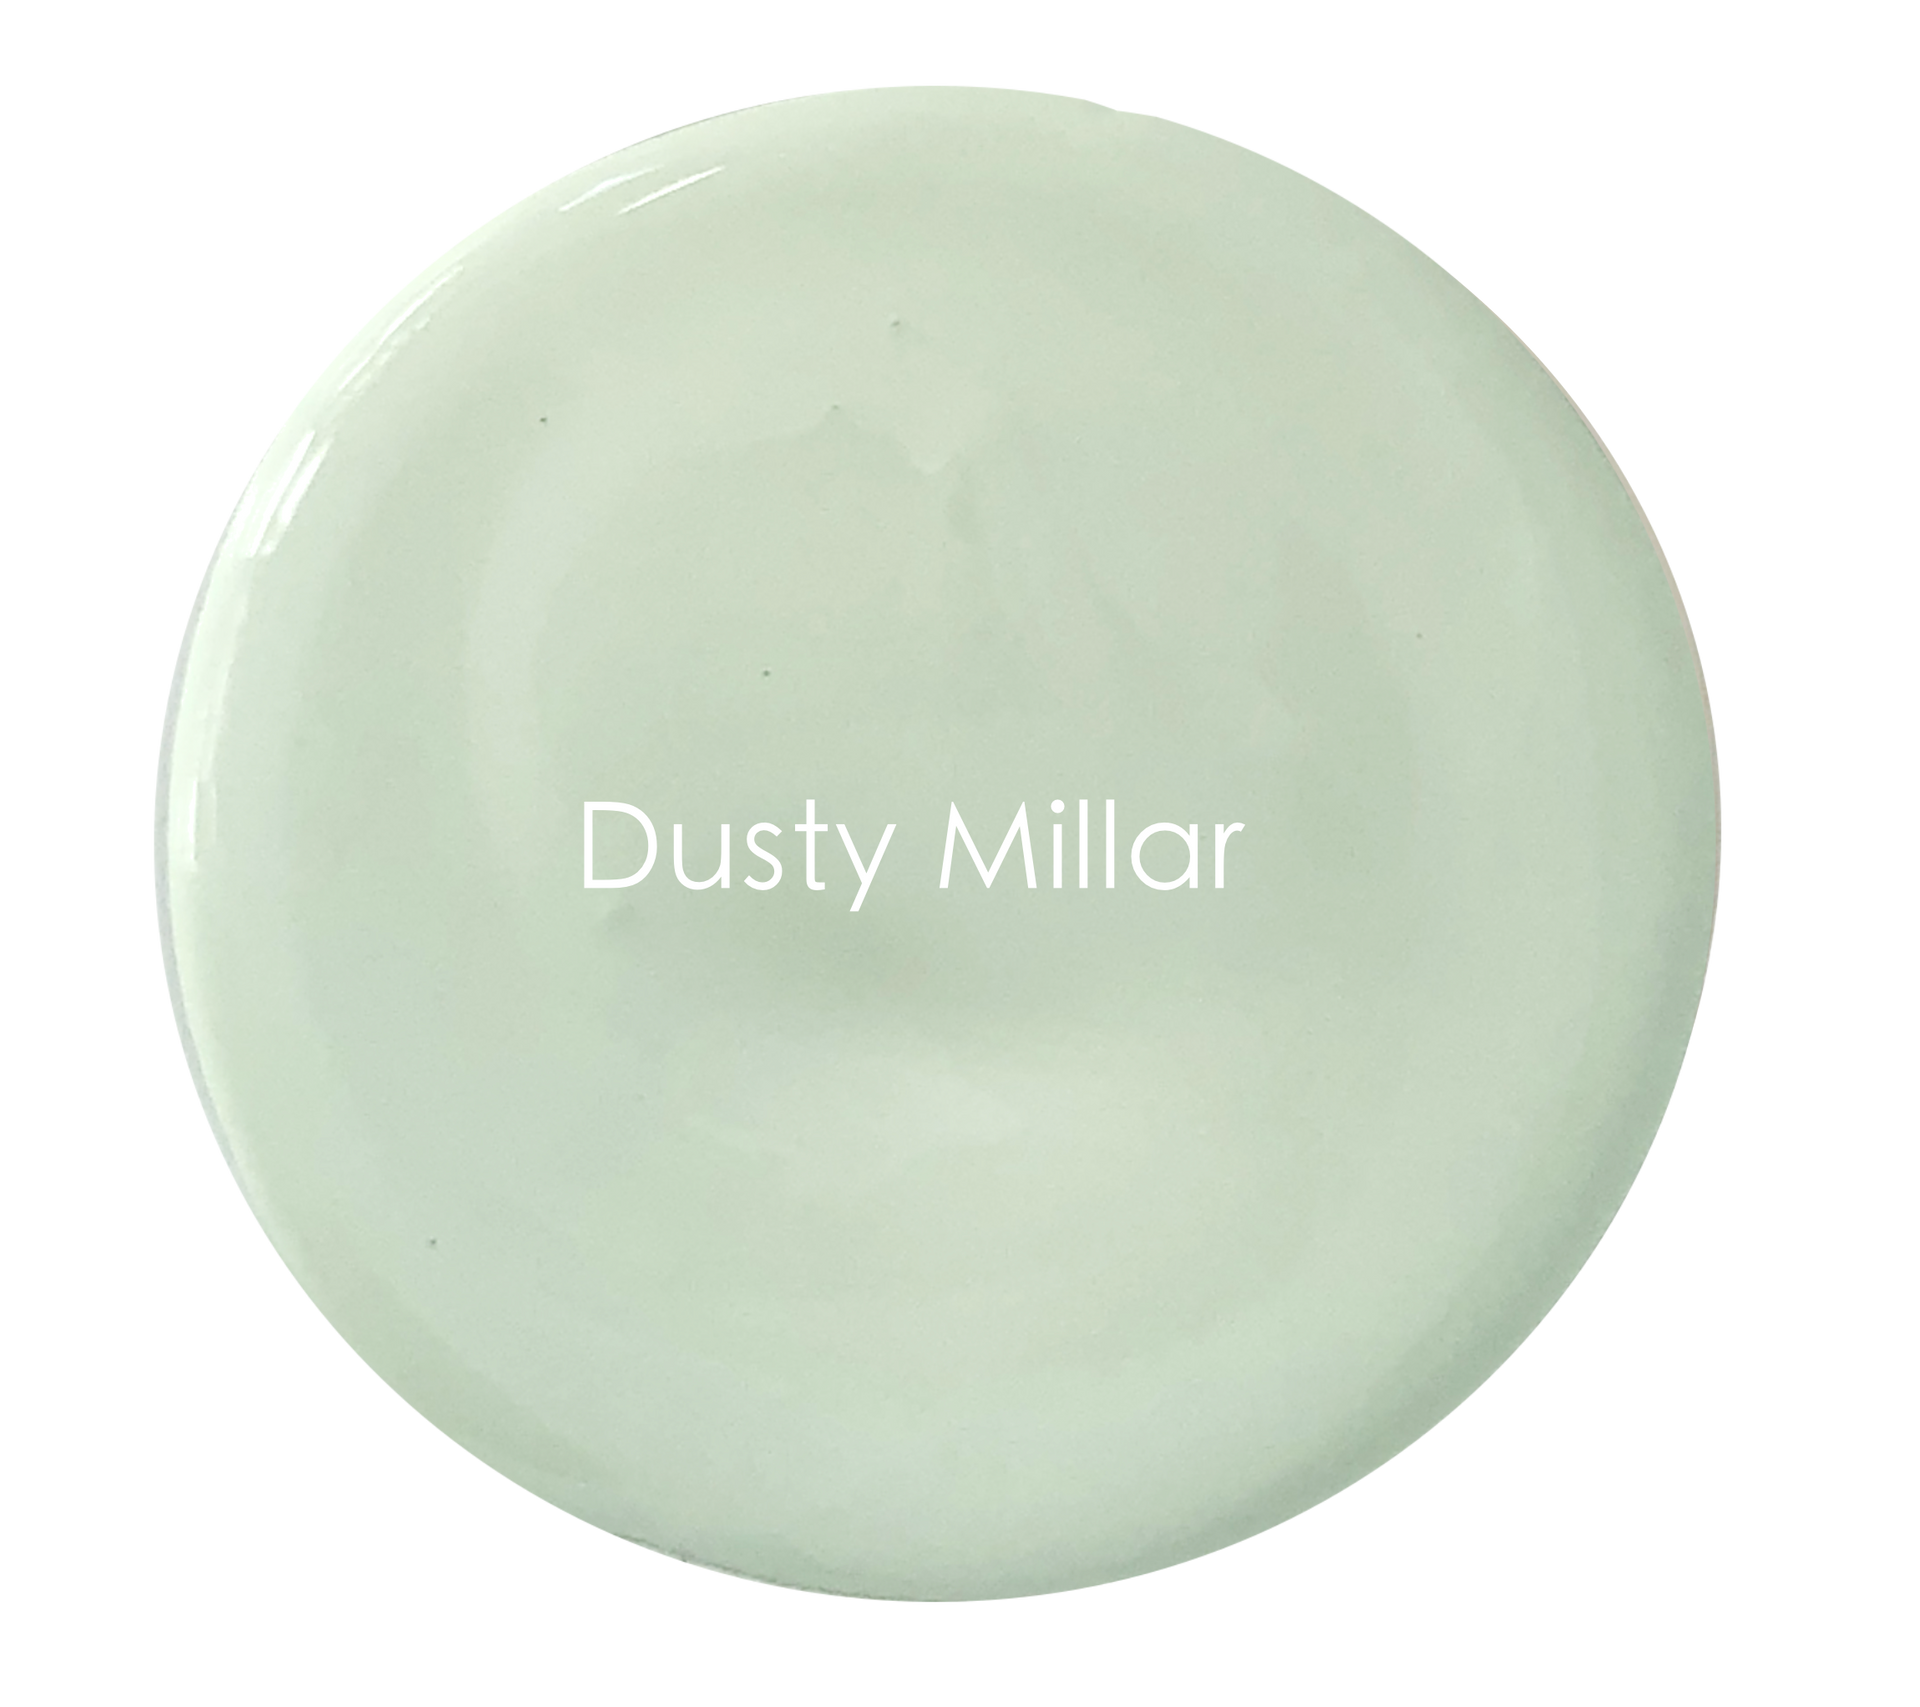 Dusty Millar - Premium Chalk Paint